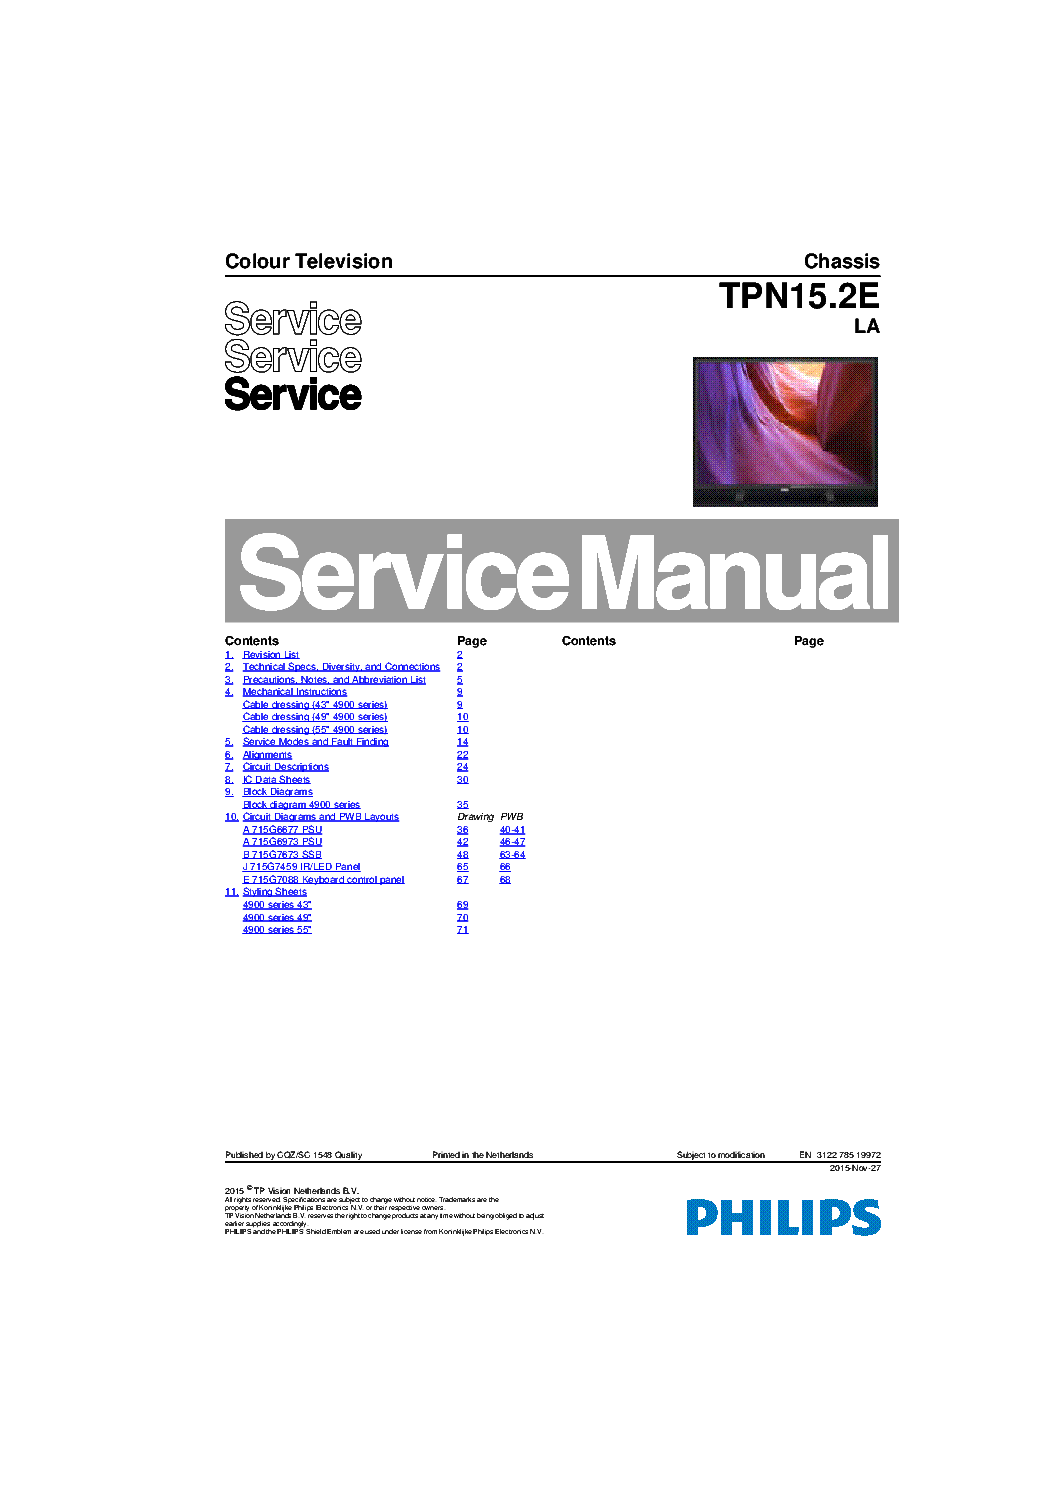 PHILIPS CHASSIS TPN15.2E LA 49PUK4900 SM service manual (1st page)